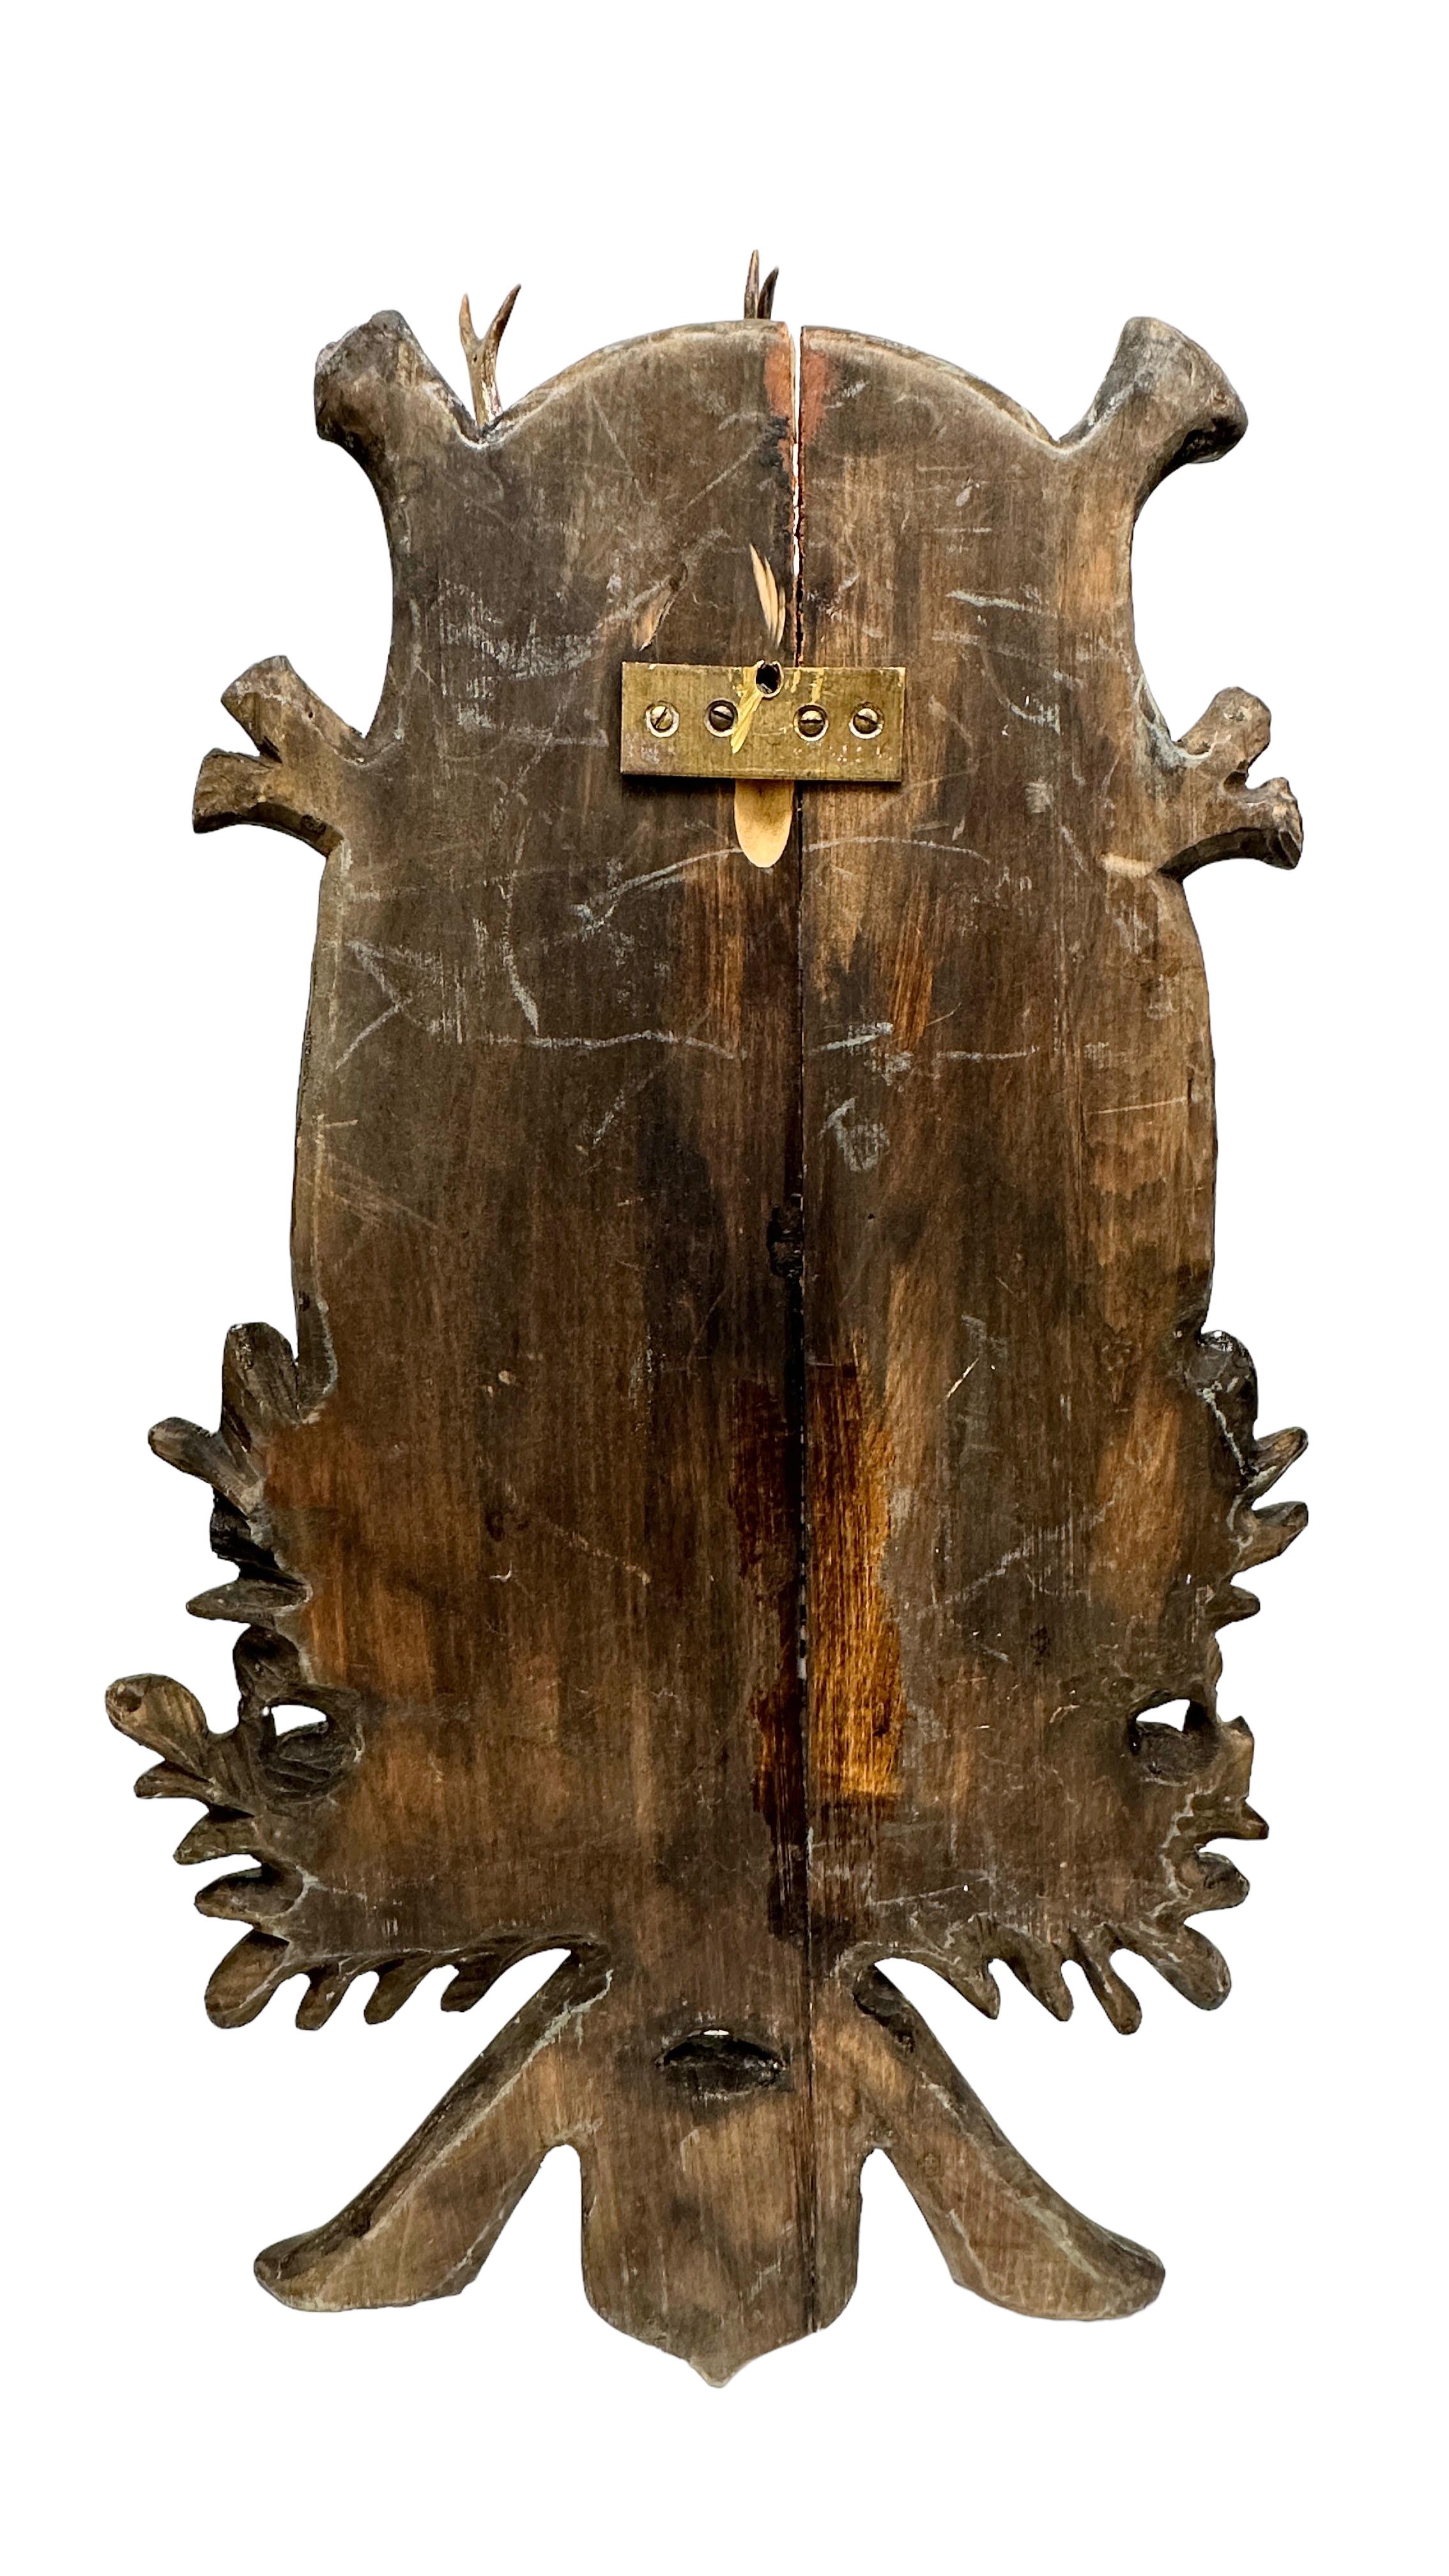 Hand-Carved Large Folk Art Wood Carved Deer Head Plaque Trophy with Real Antlers, Austria